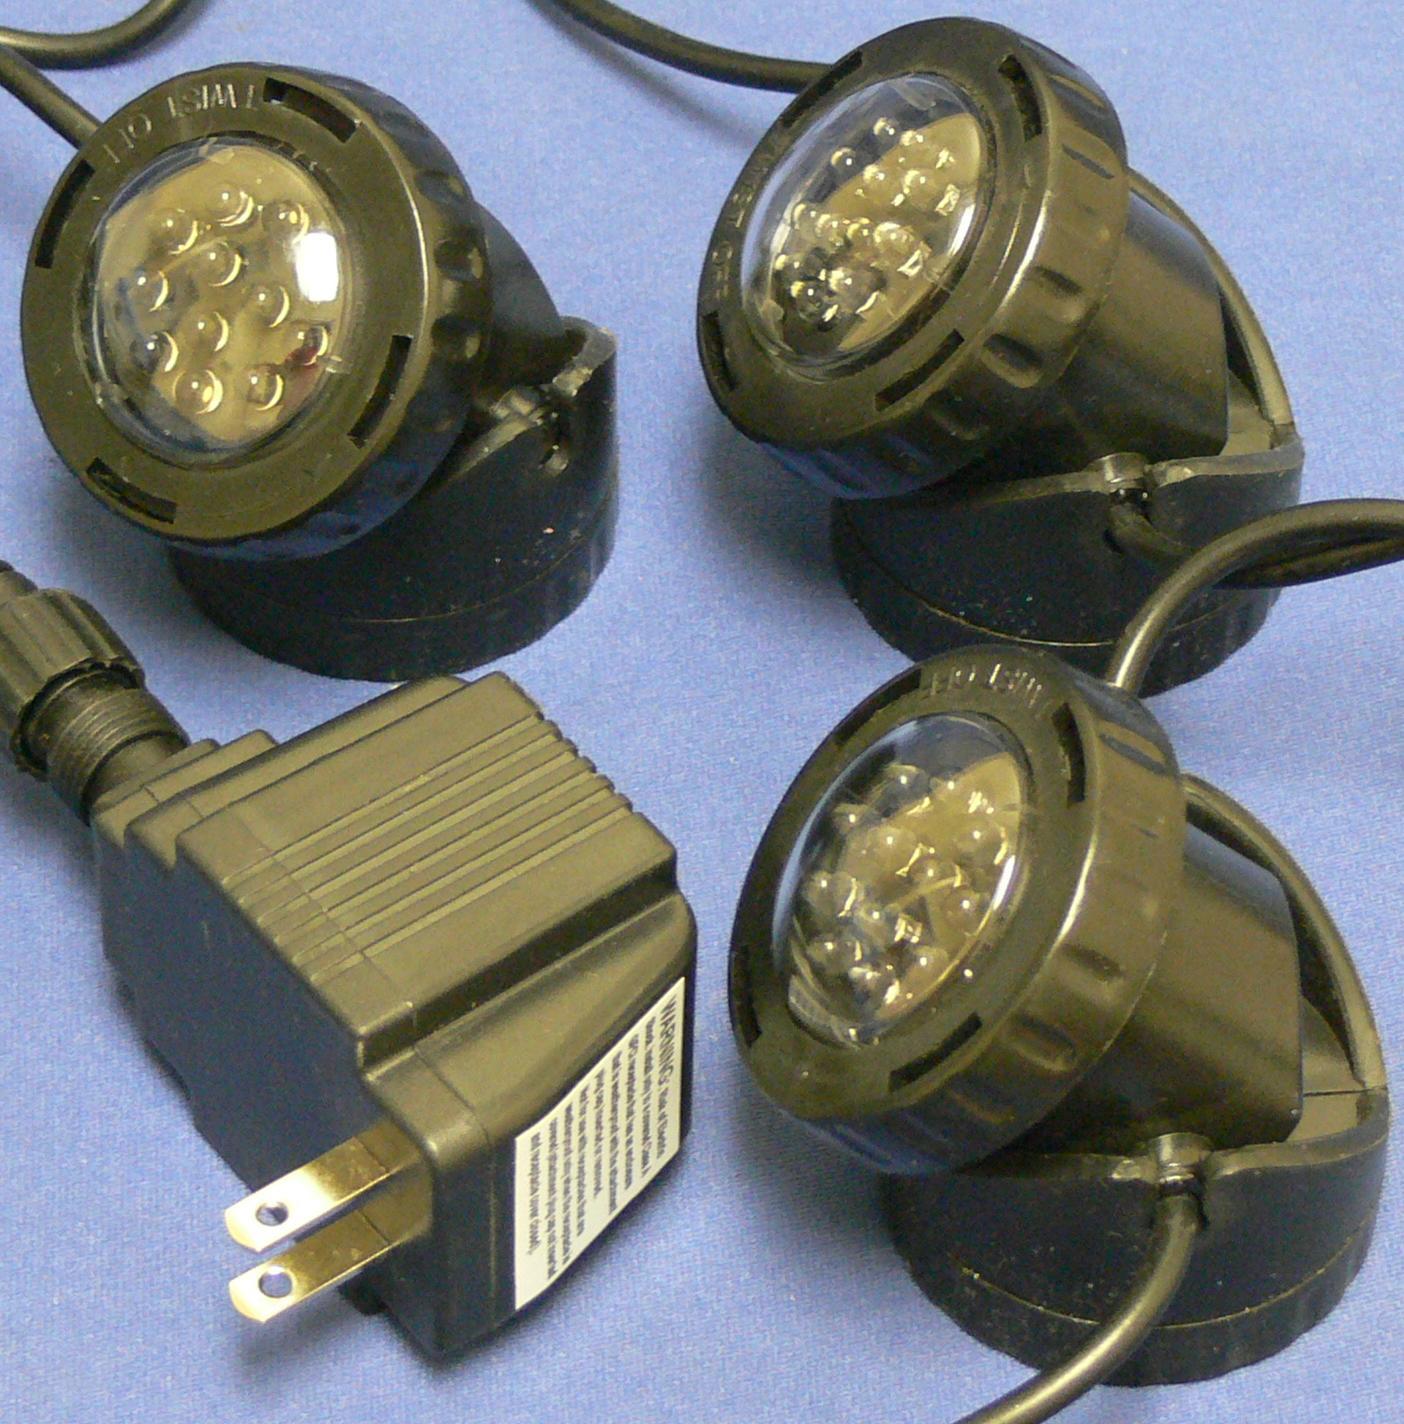 jebao 12V LED lighting kit